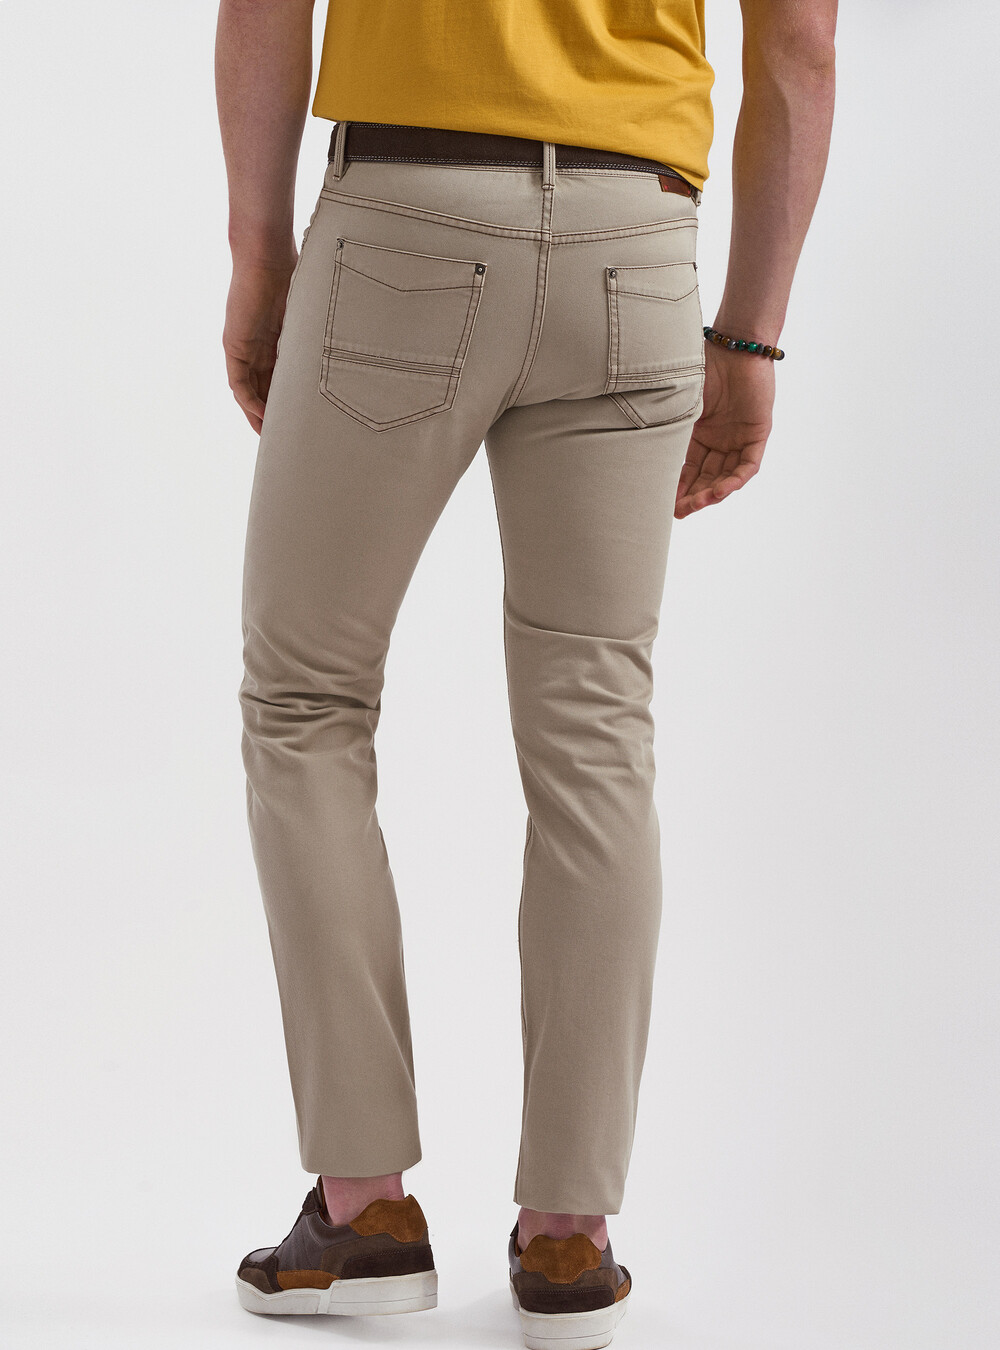 stum afslappet jøde Coloured slim fit jeans | GutteridgeUS | catalog-gutteridge-storefront Uomo